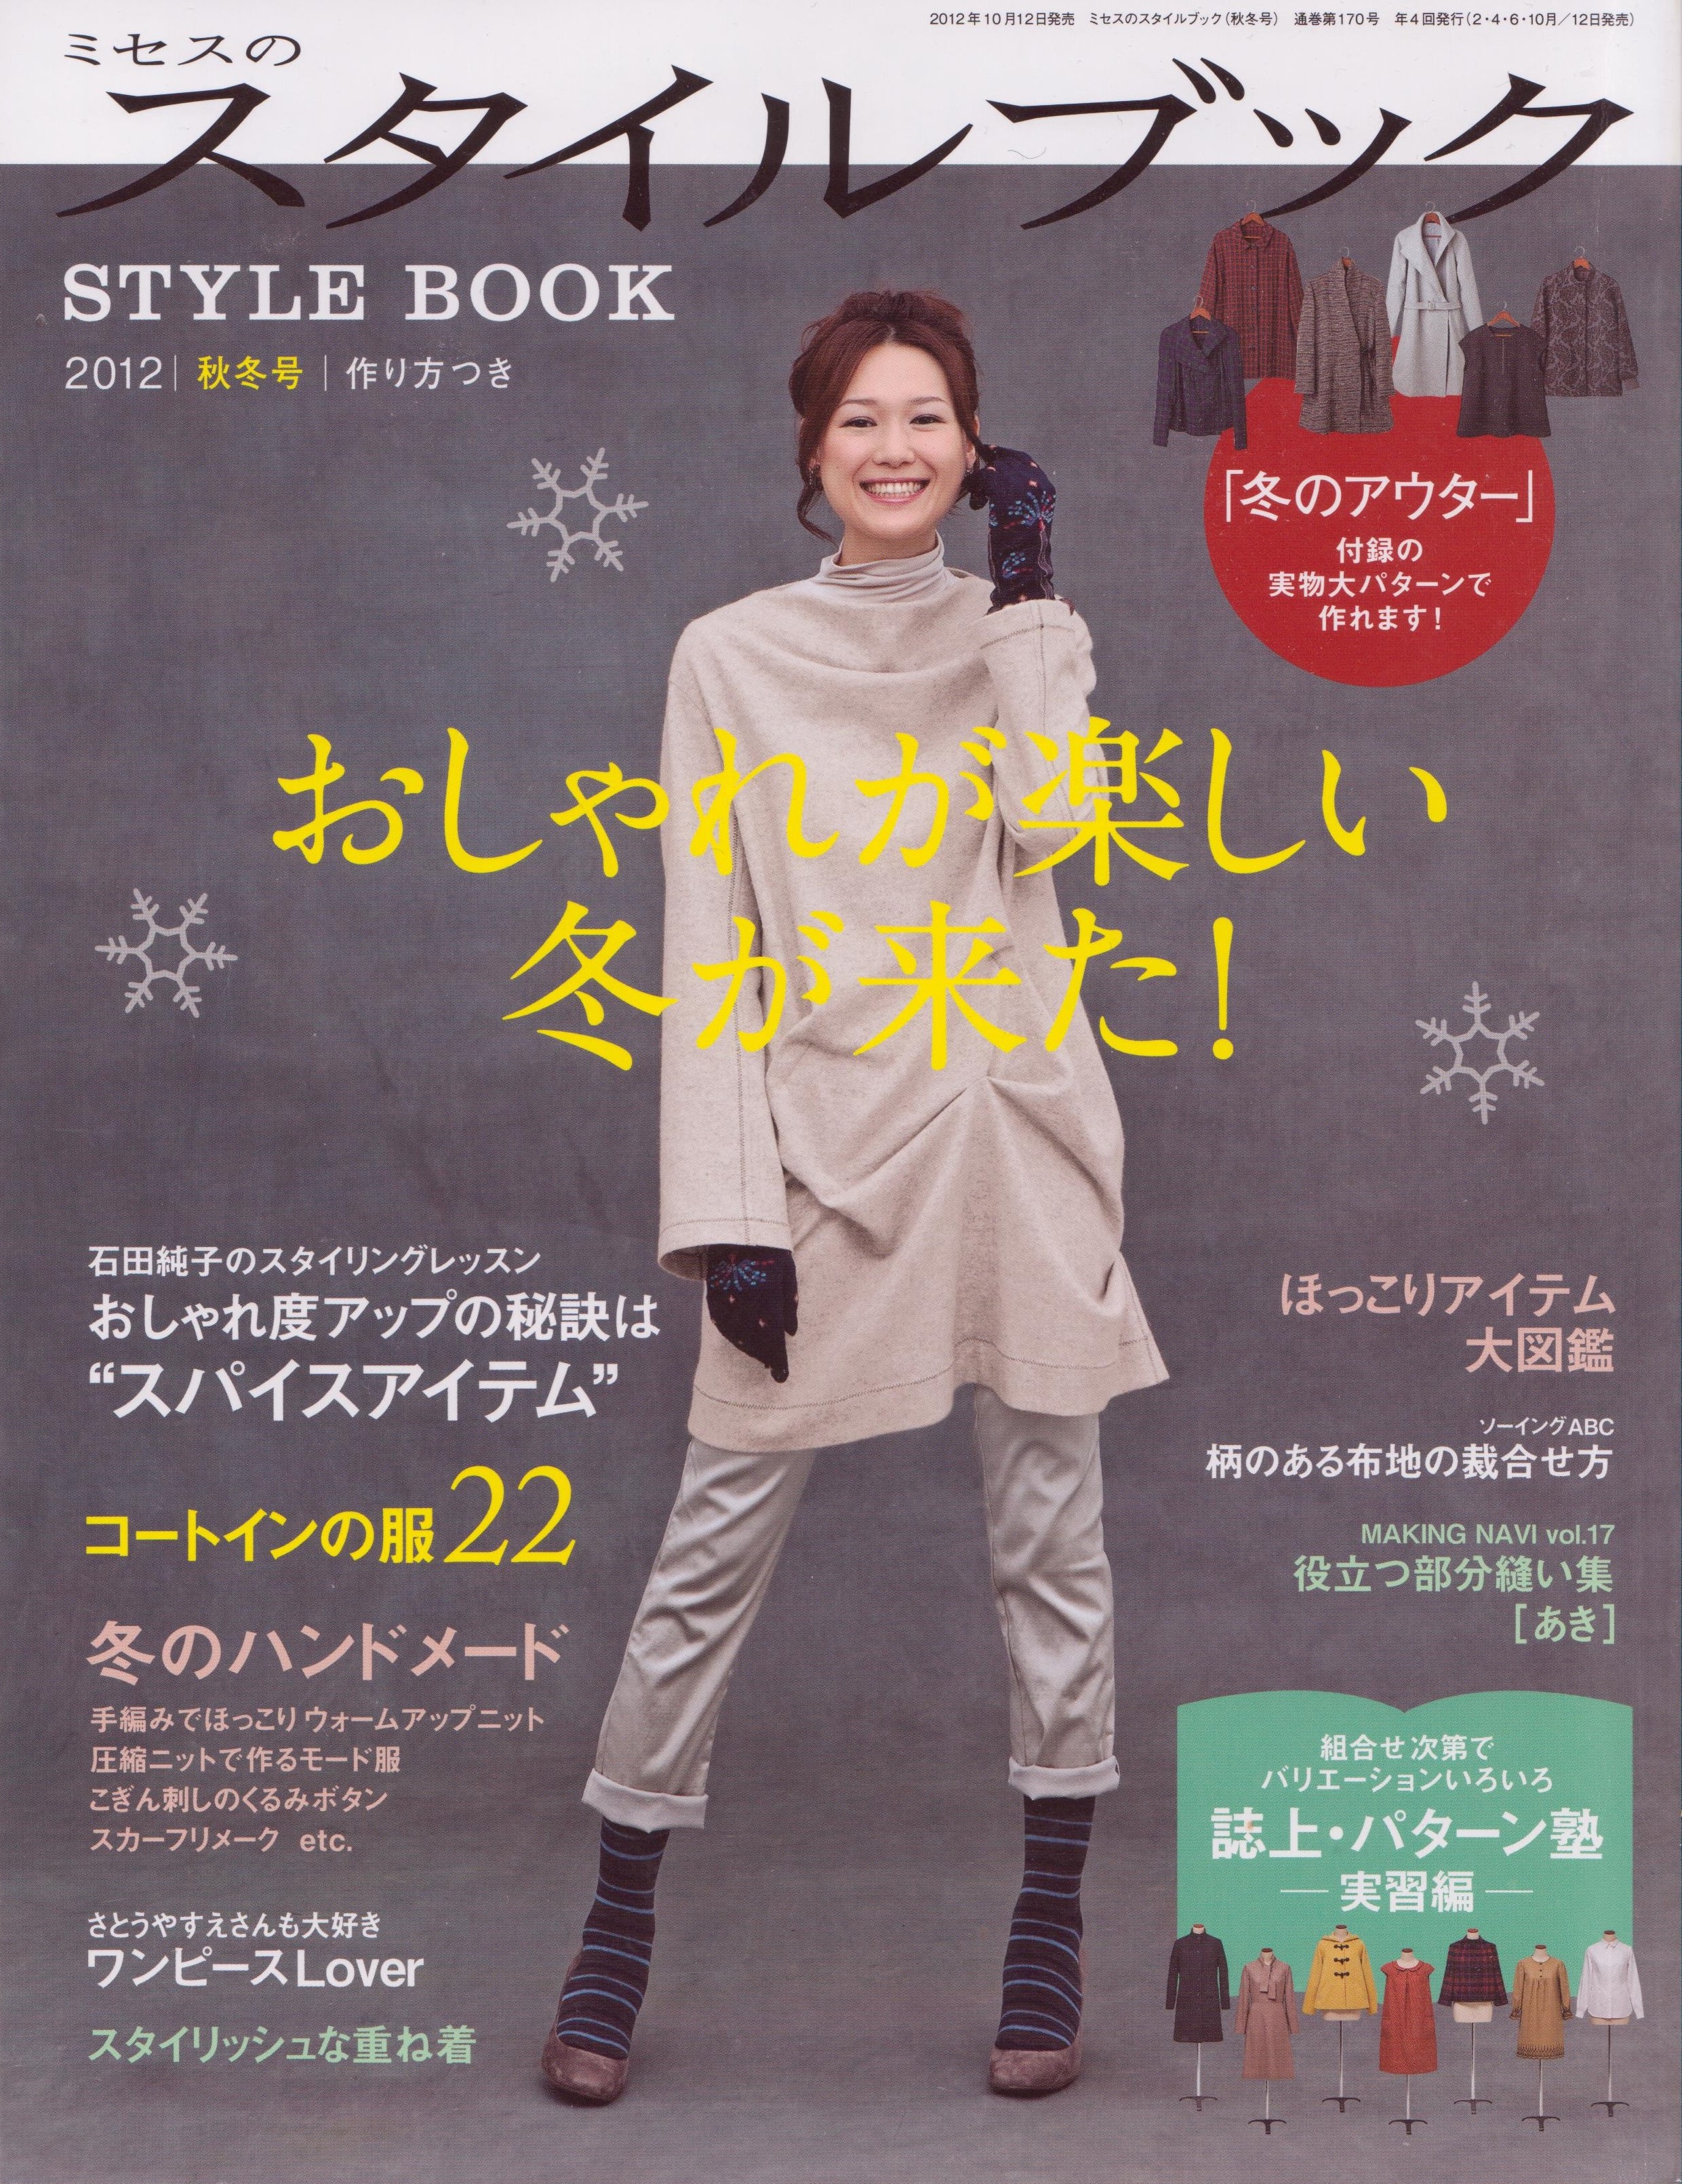 Style book. Японские журналы по шитью. Японские журналы мод. Японские модные журналы. Японский журнал мод Mrs Style book.